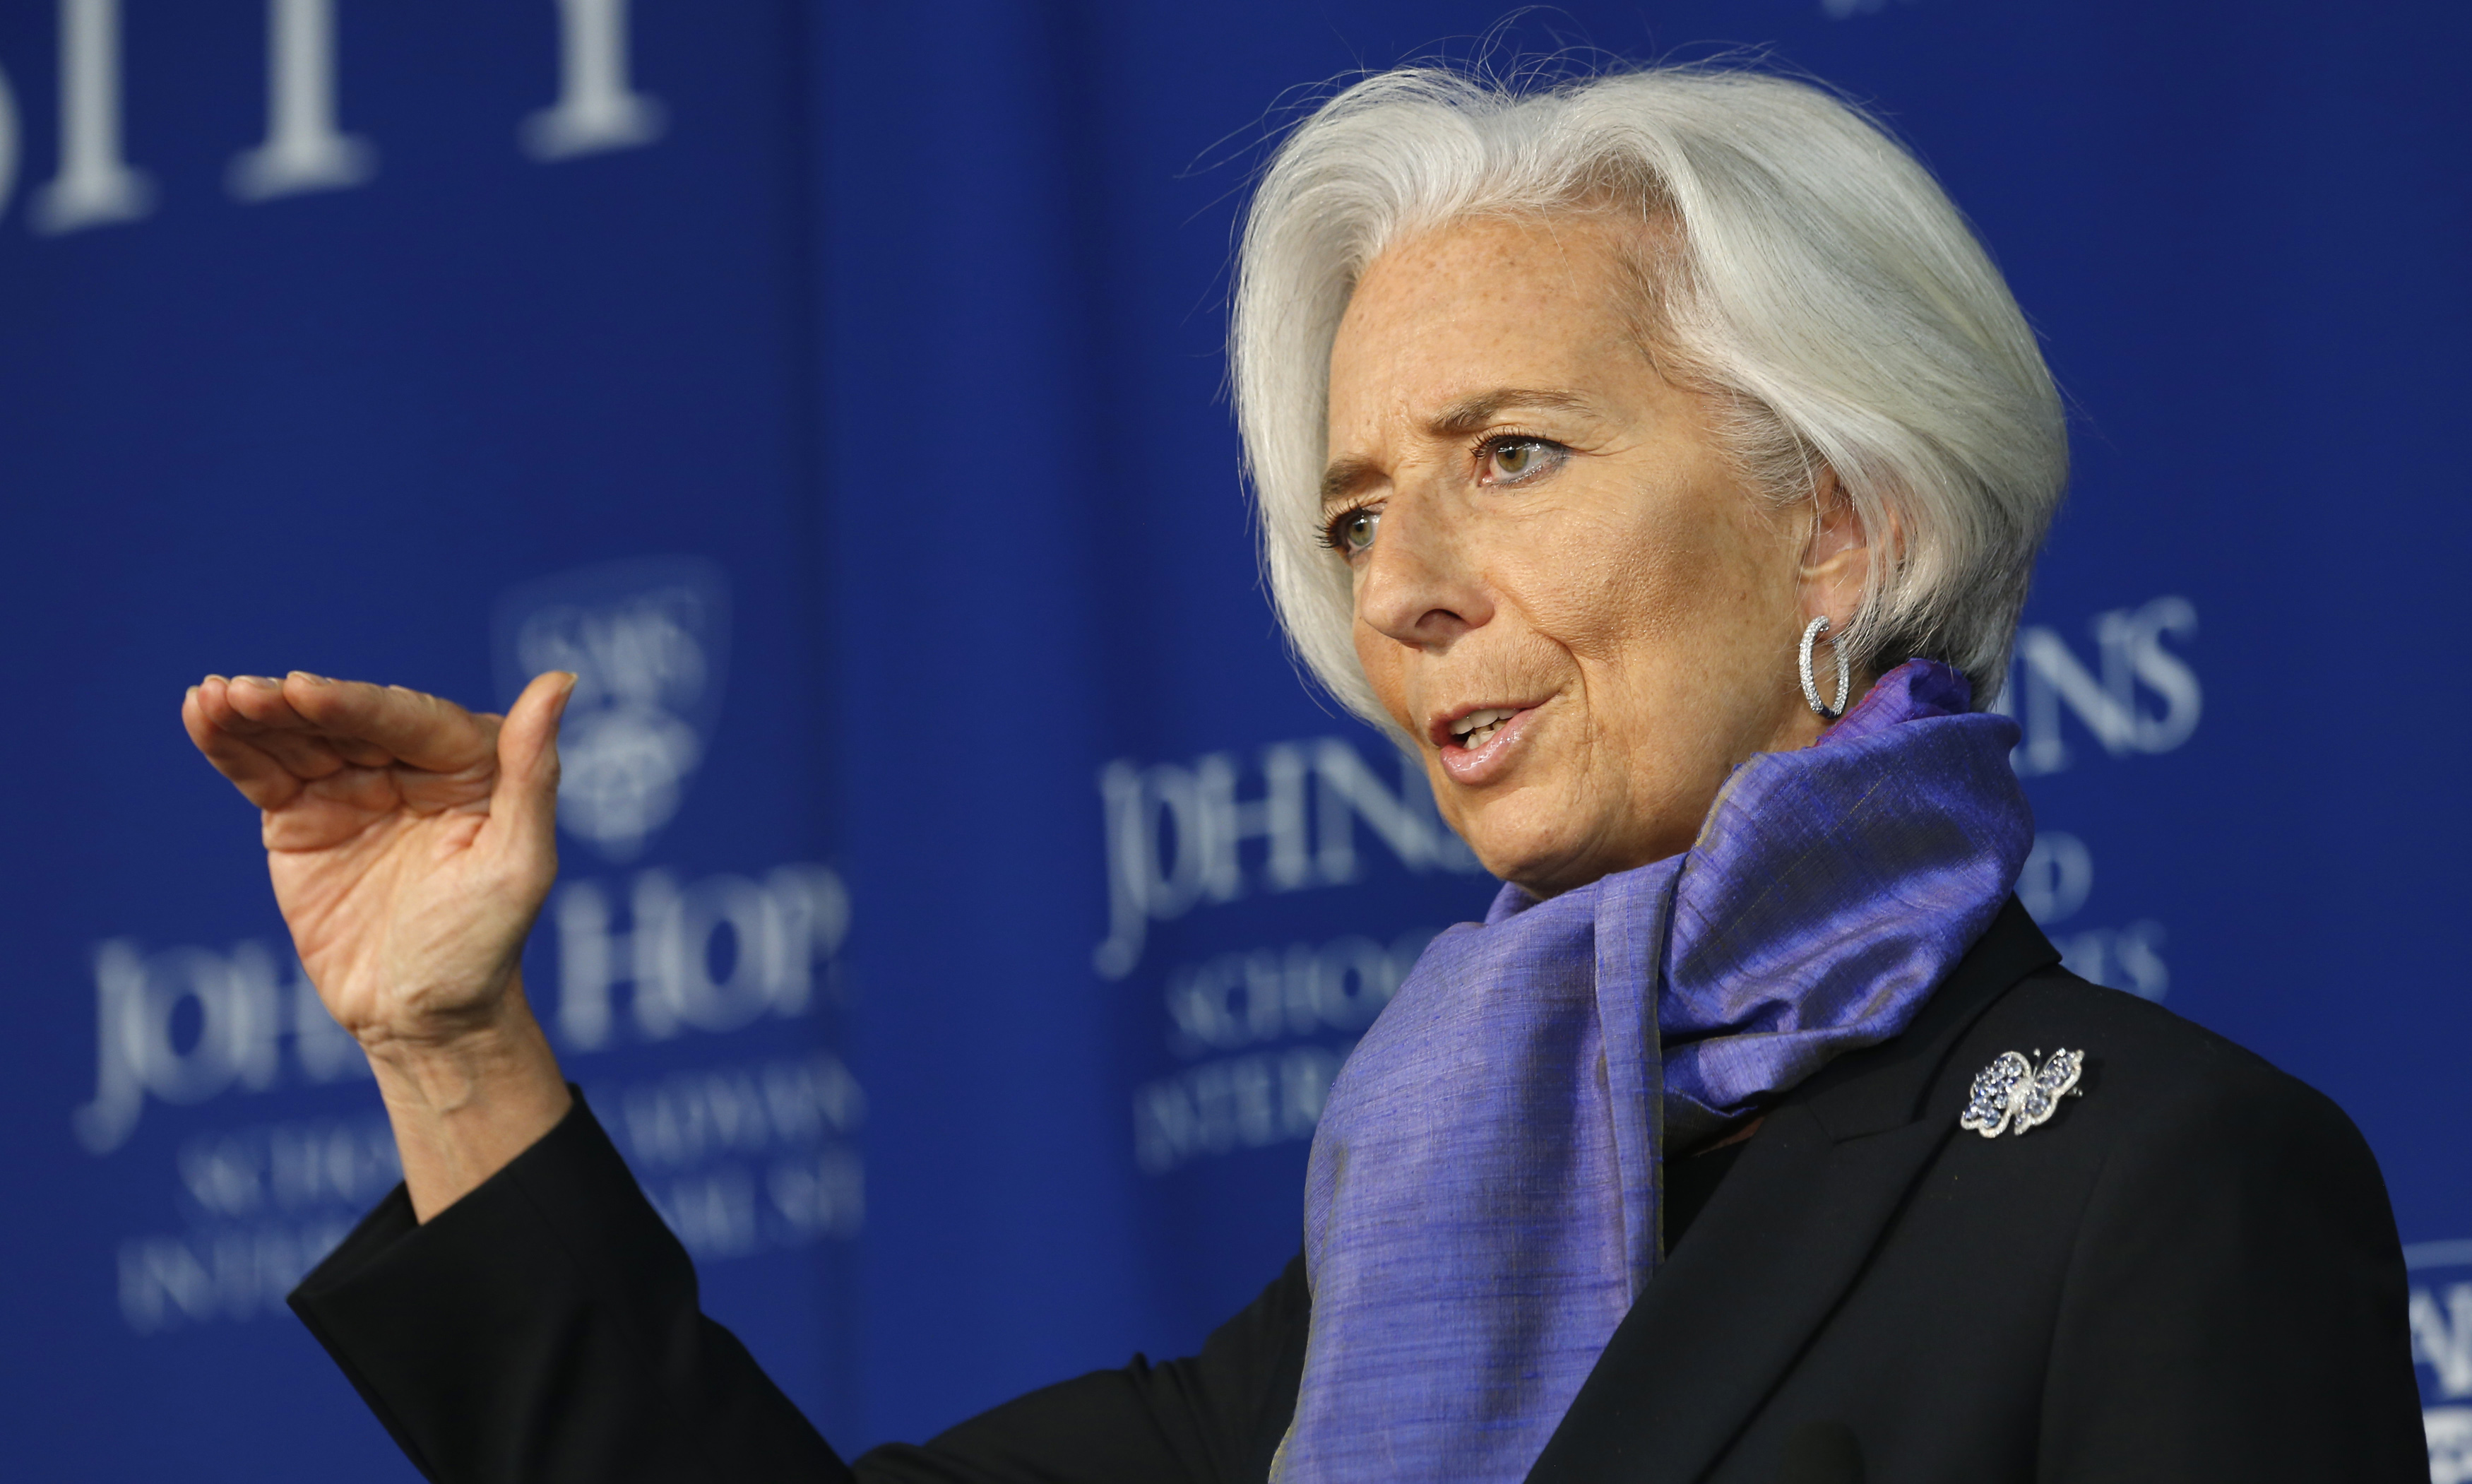 Christine Lagarde, International Monetary Fund Managing Director